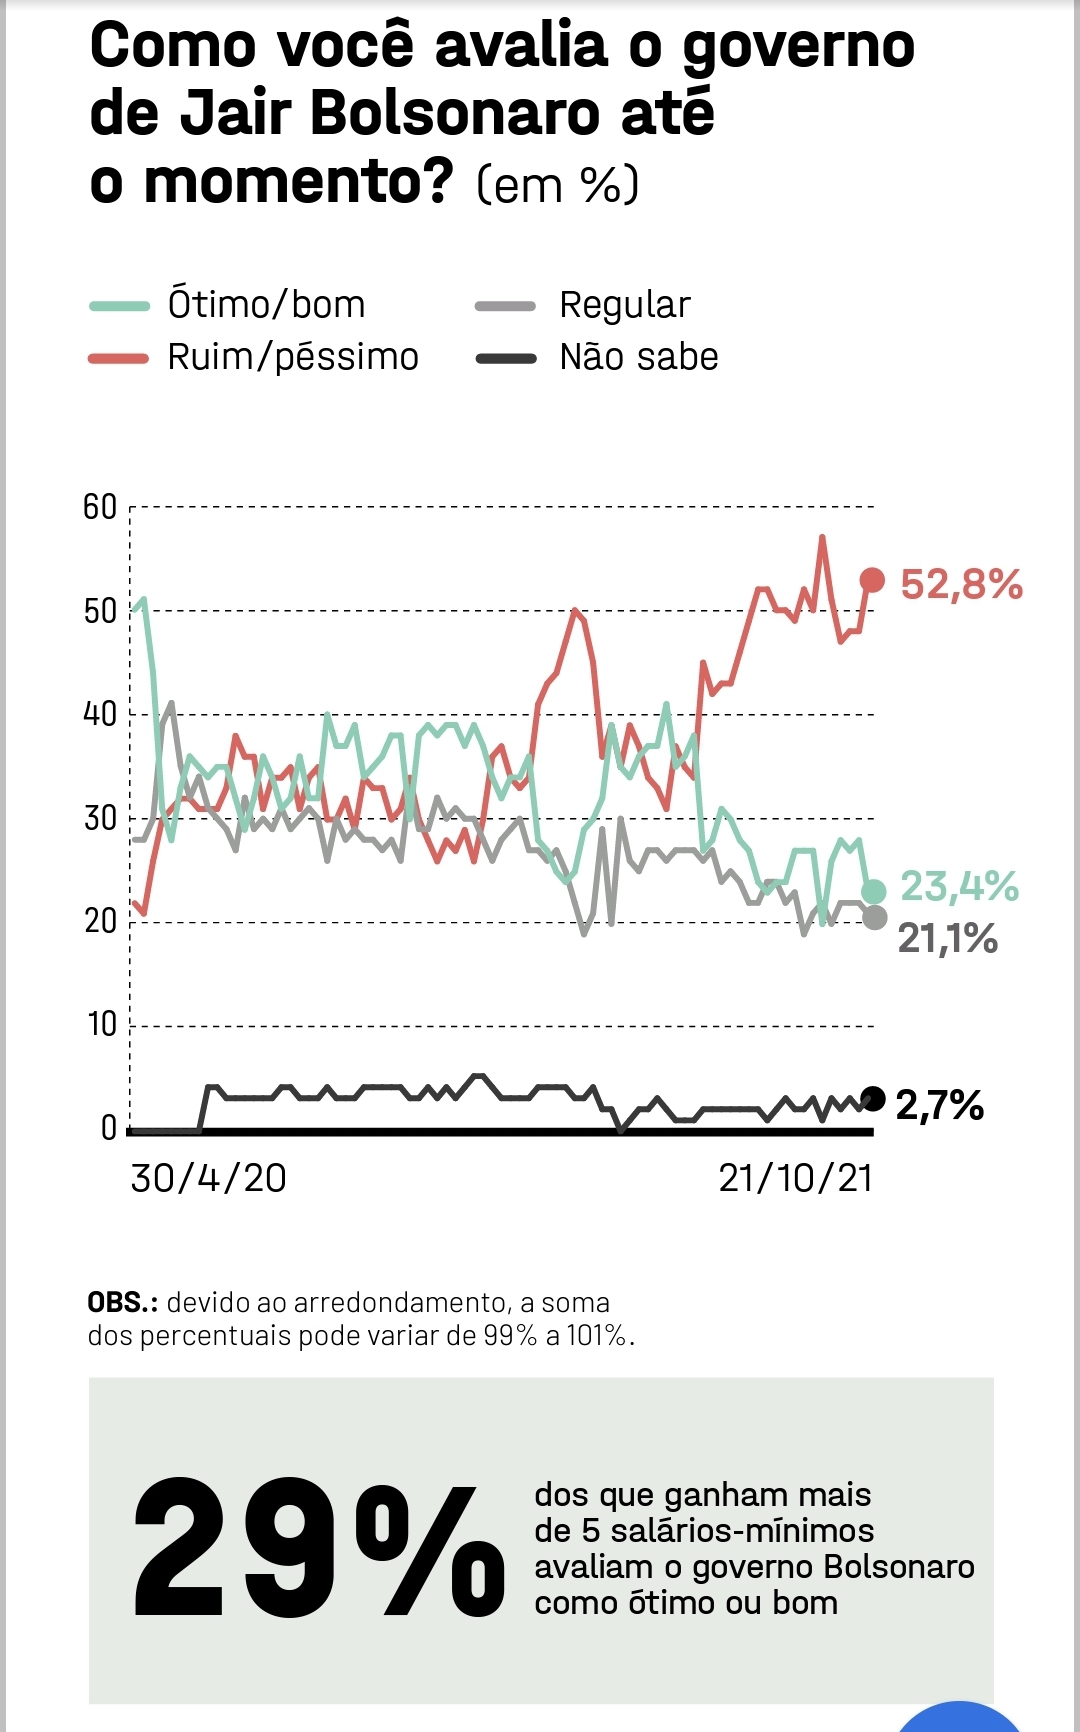 Rejeição a Bolsonaro chega a 53%